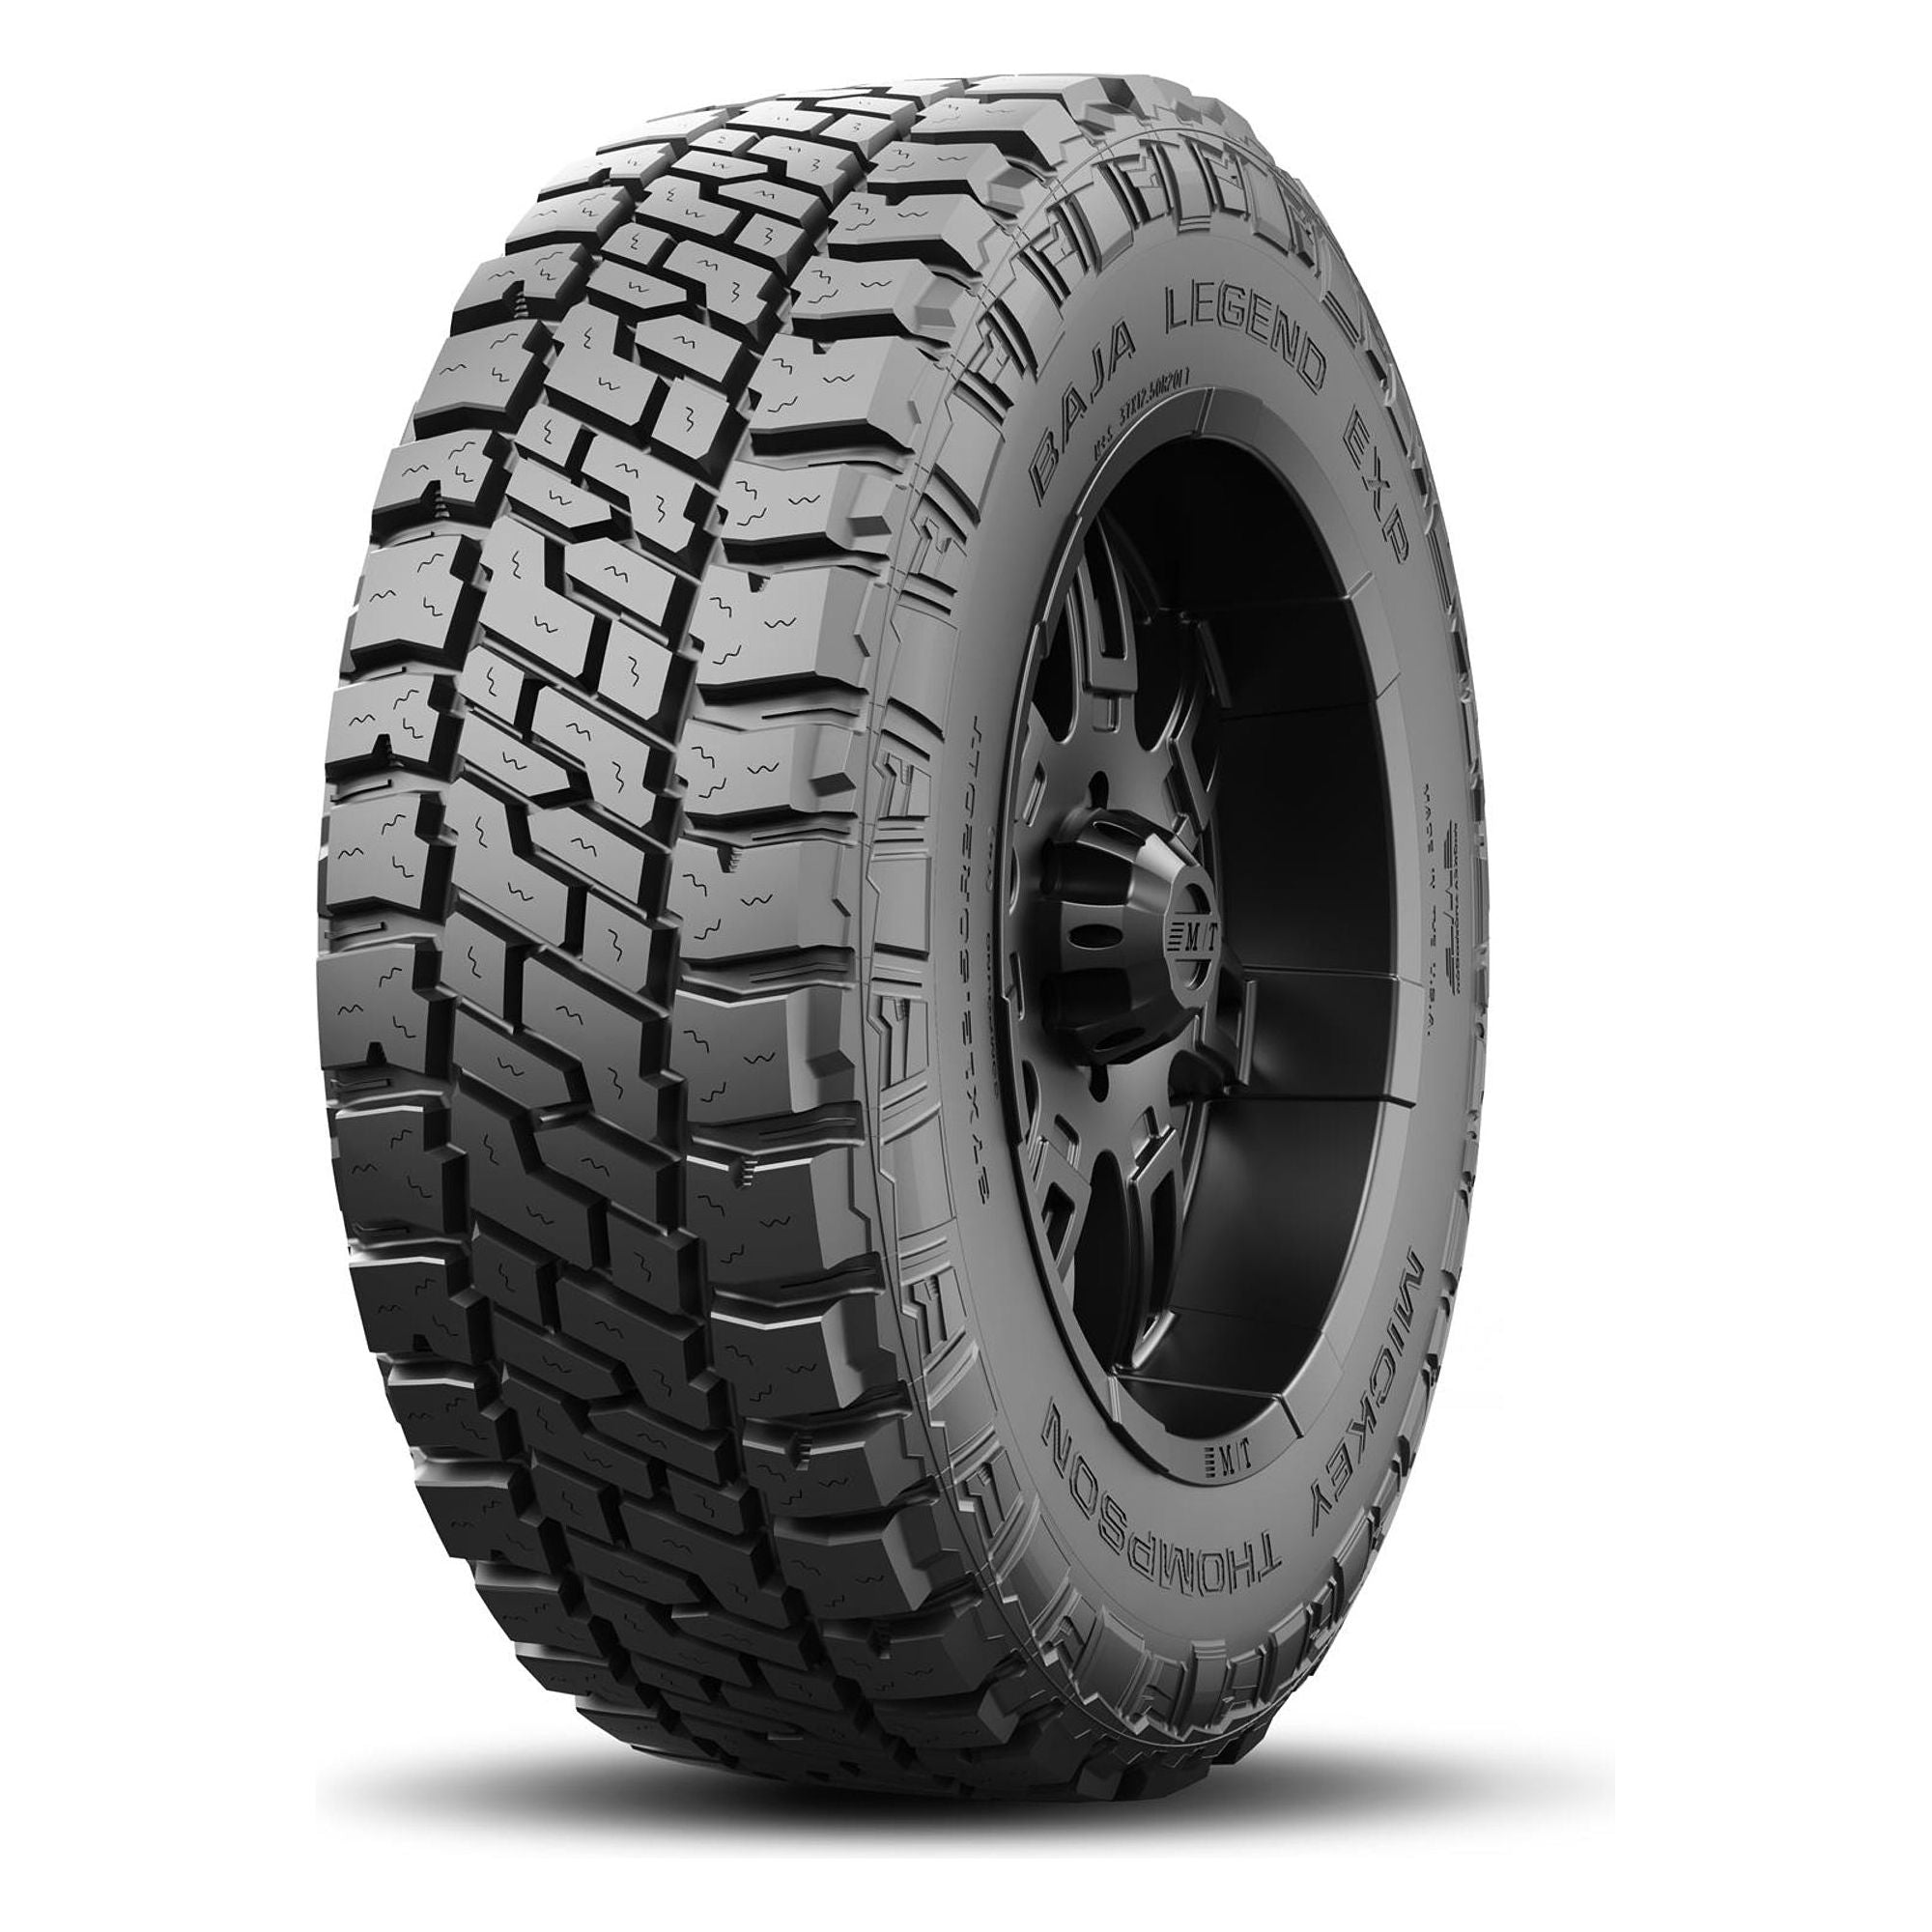 Baja Legend EXP Tire LT265/70R16 121/118Q